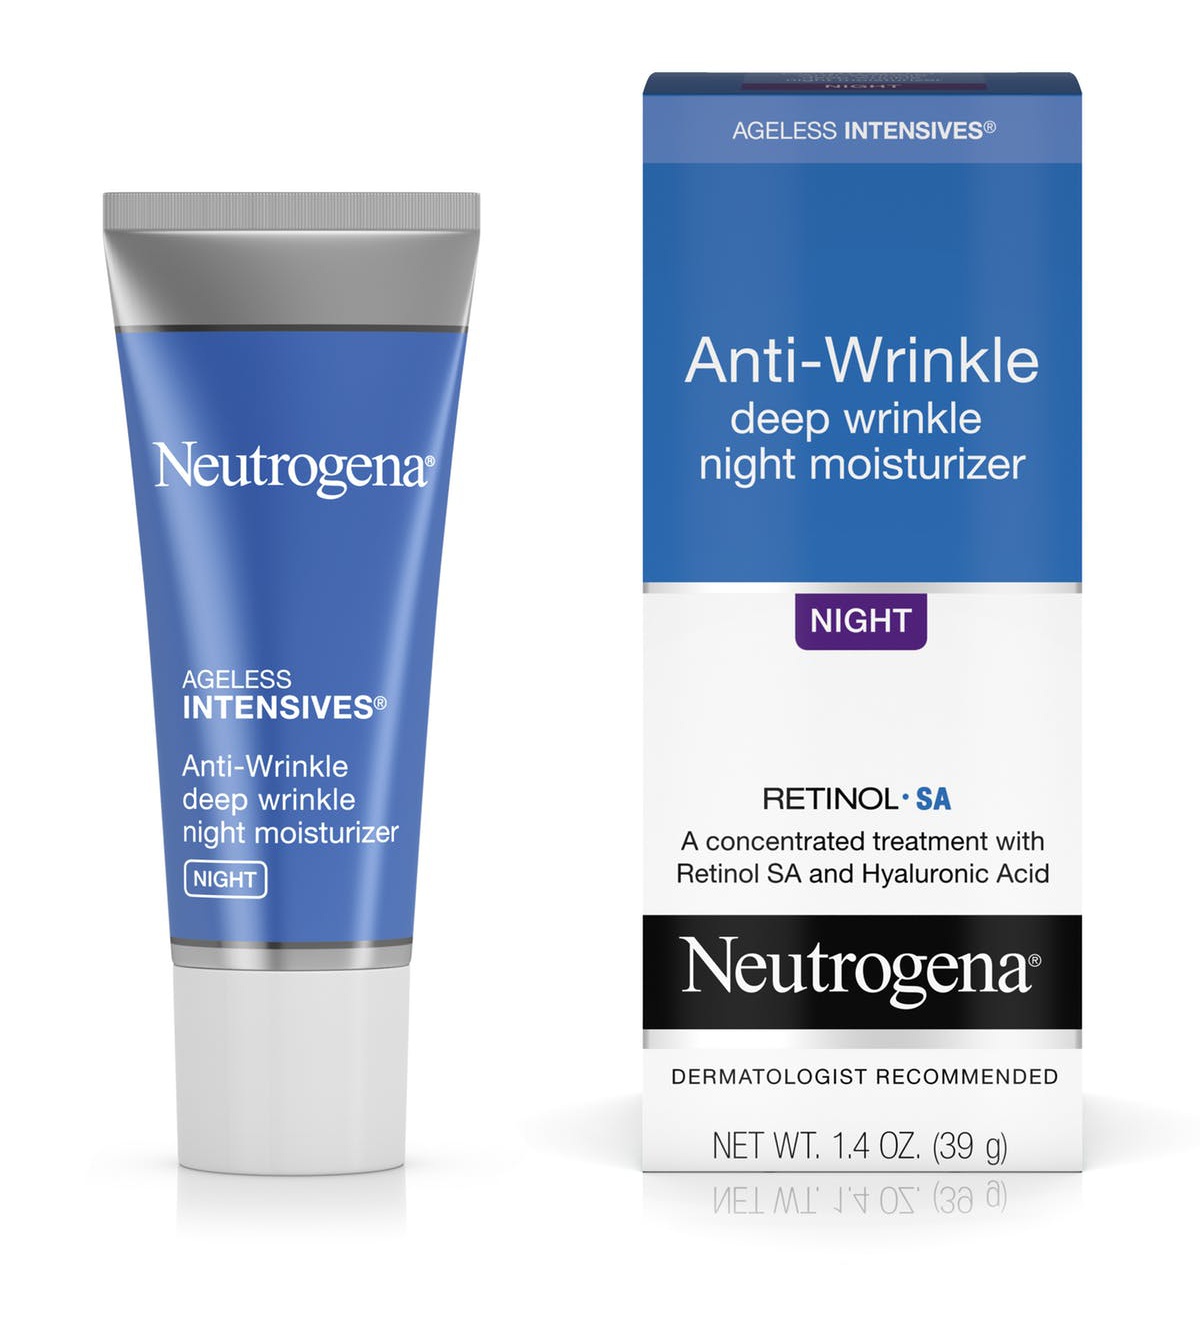 Neutrogena Ageless Intensives Anti-Wrinkle Deep Wrinkle Night Facial Moisturizer